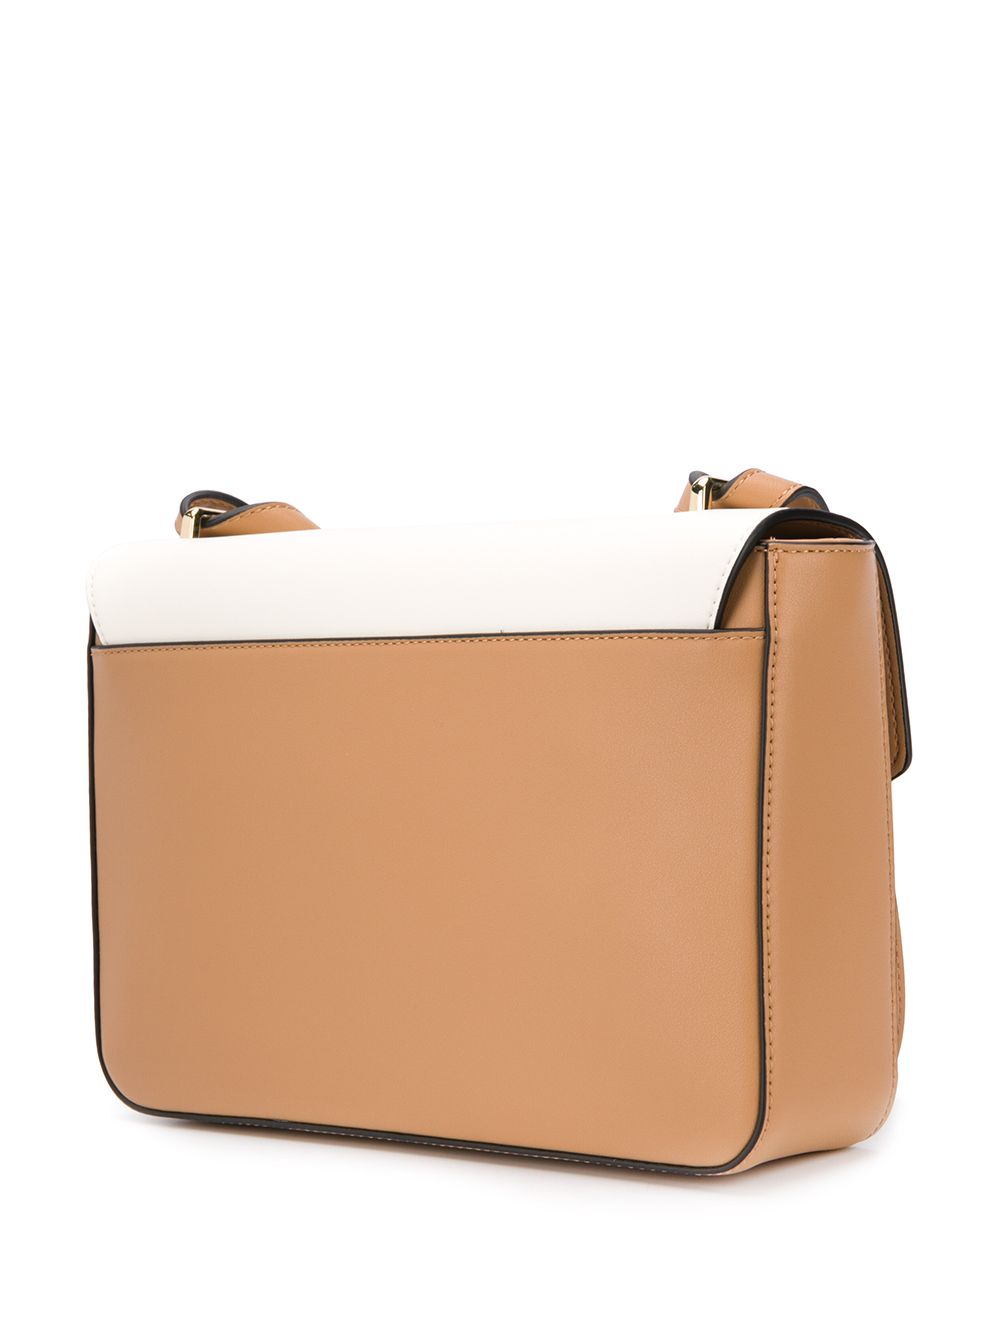 фото Love moschino сумка в стиле колор-блок с логотипом